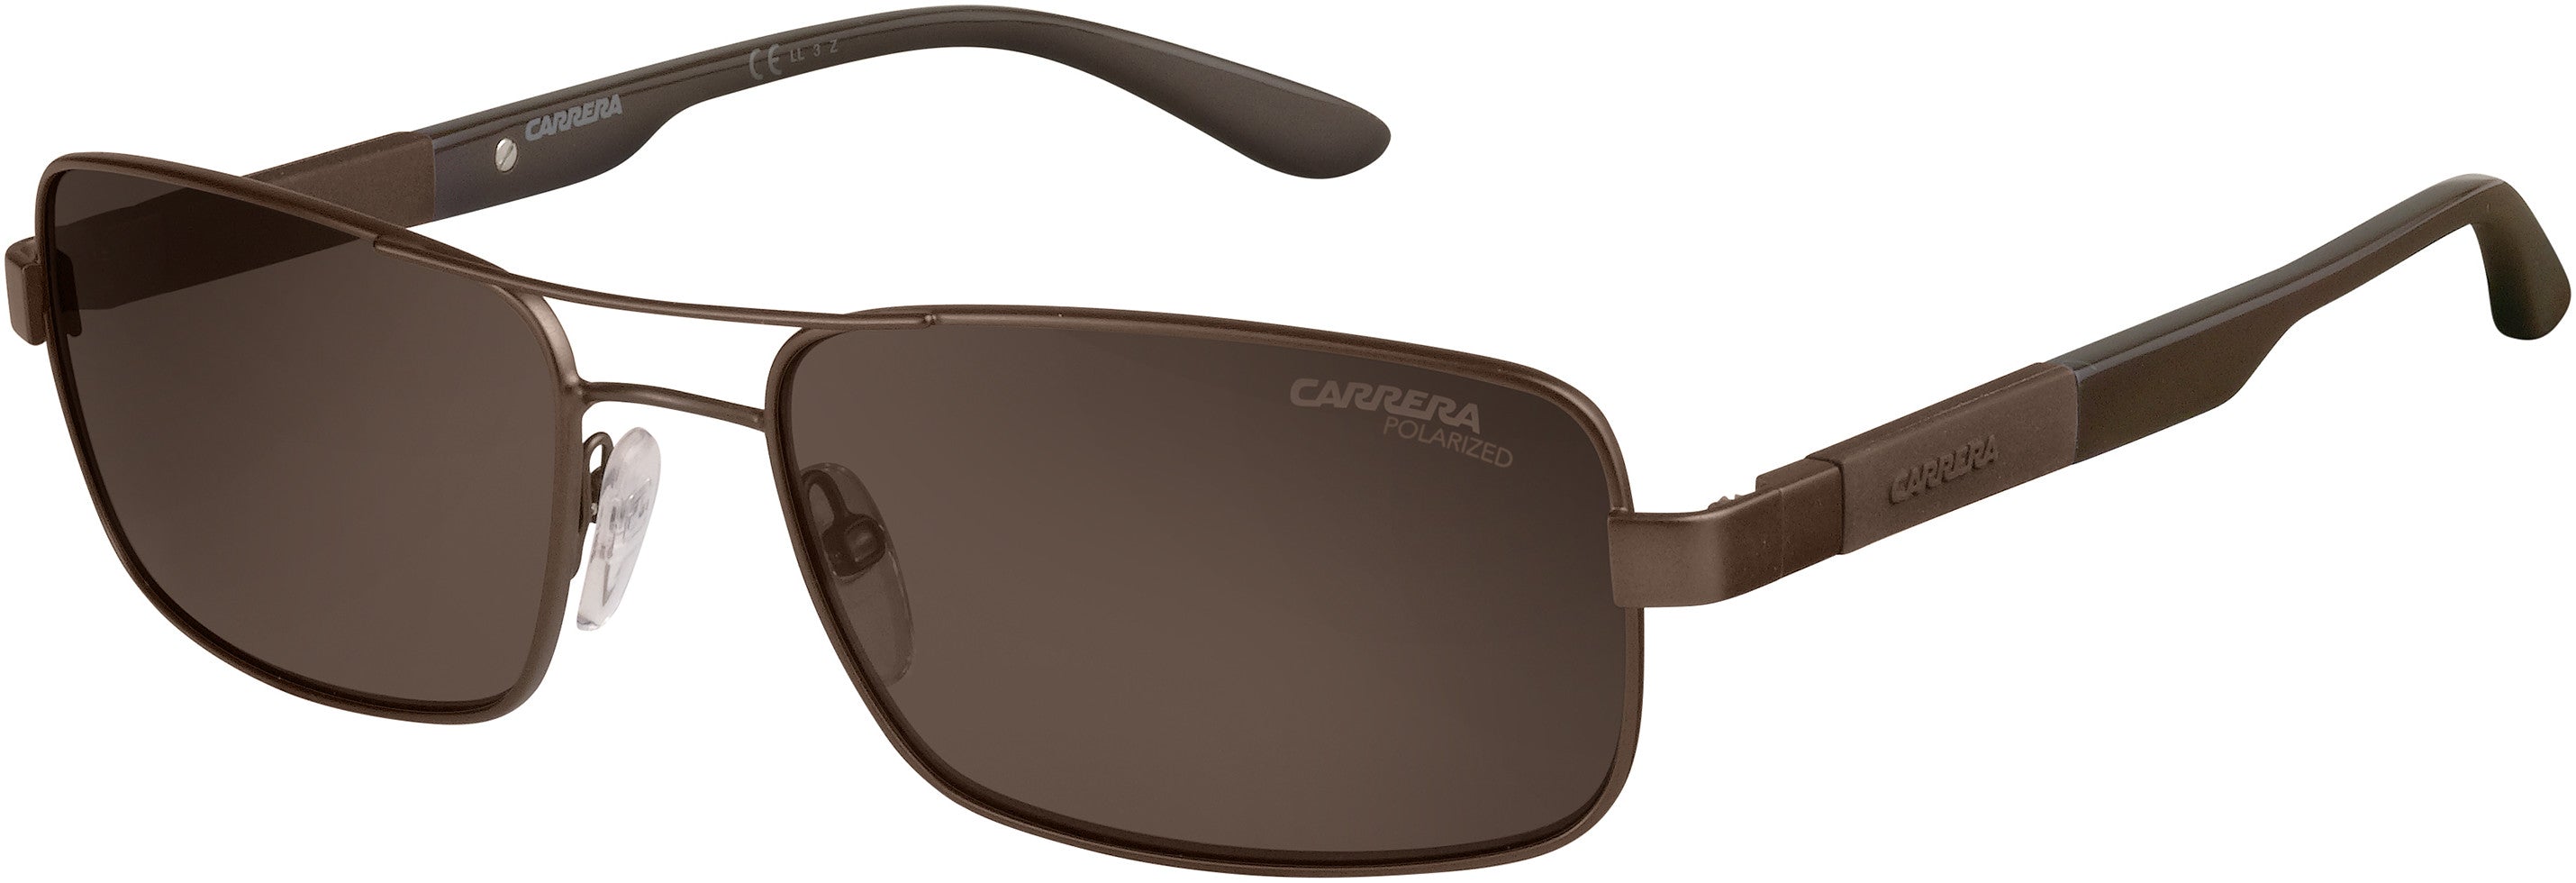  Carrera 8018/S Square Sunglasses 0TVL-0TVL  Matte Brown (SP Bronze Pz)